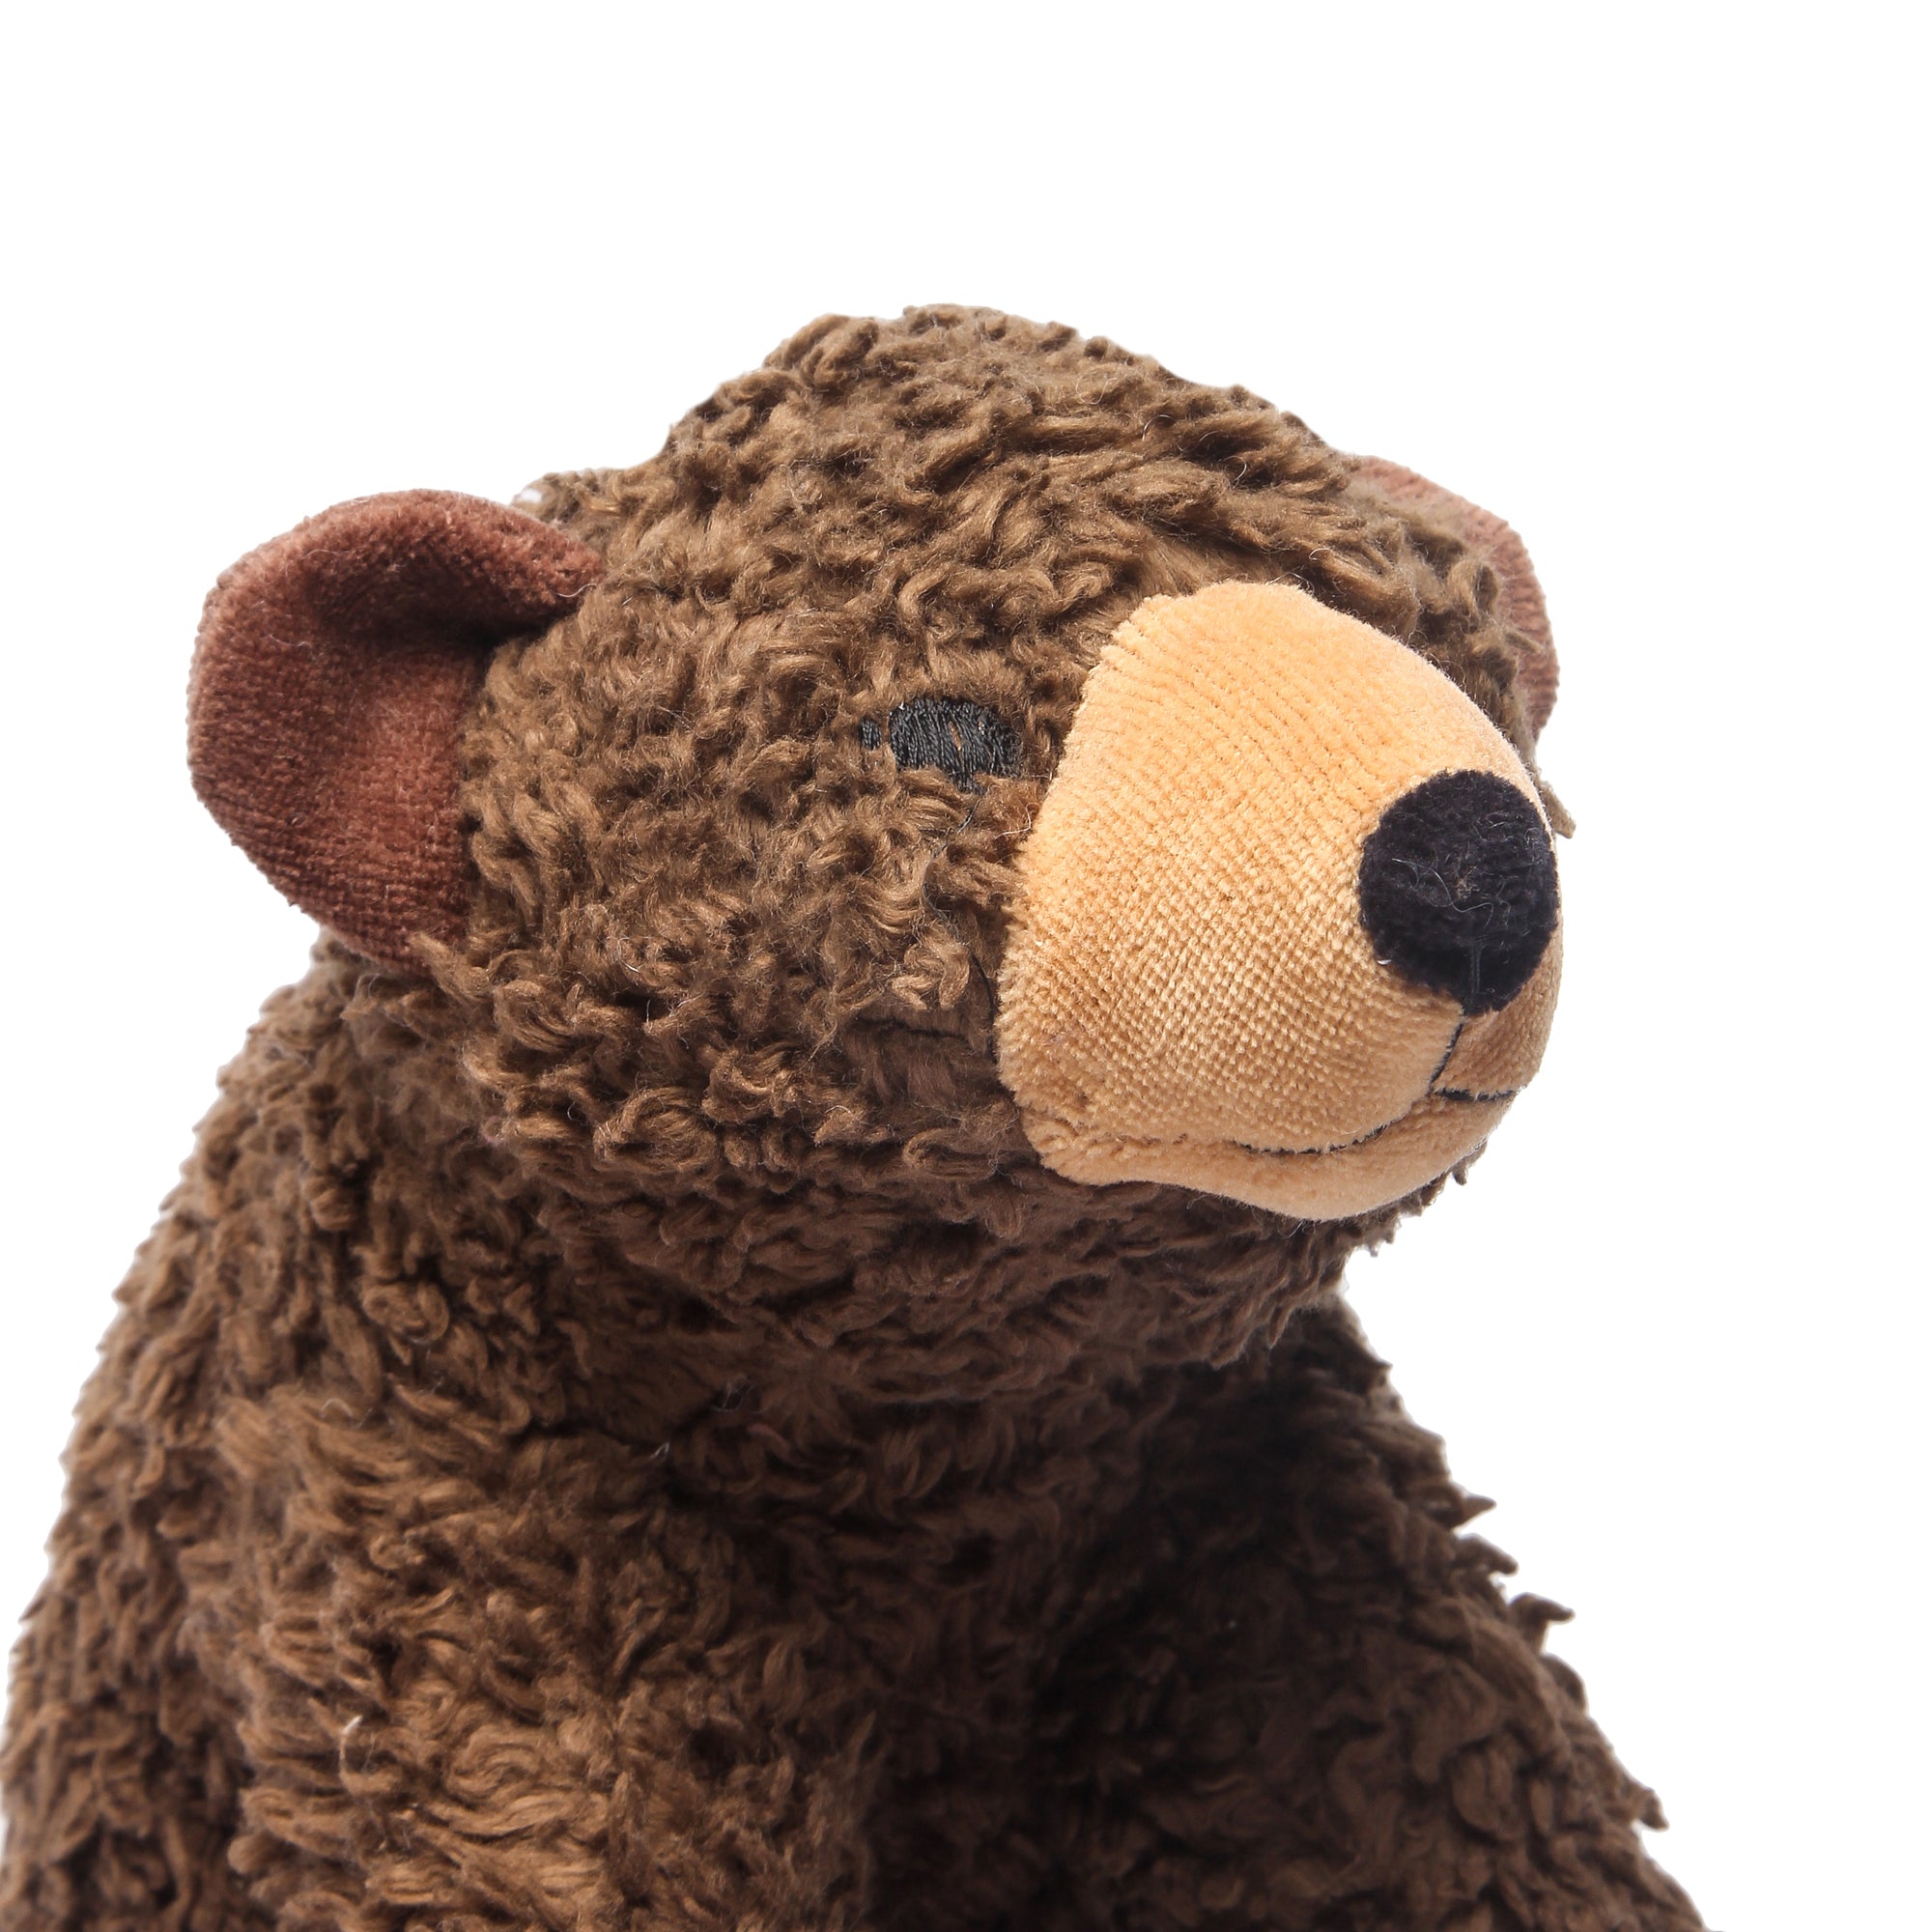 Organic Brown Bear Stuffed Animal, Brown Bear Plush Toy